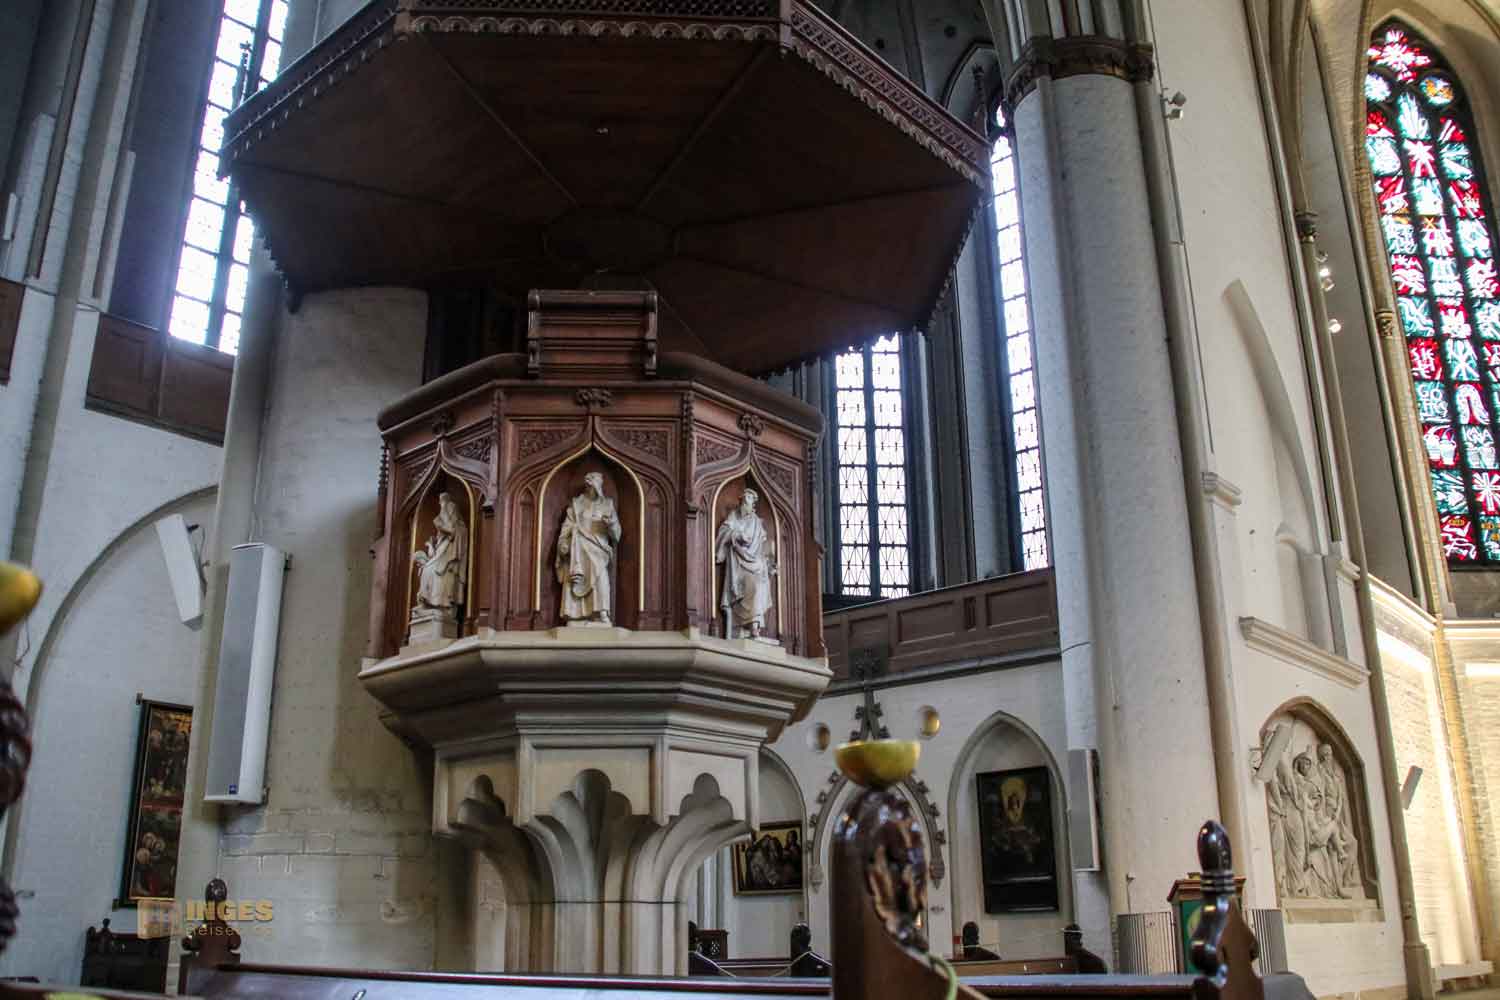 Kanzel in der St. Petri Kirche Hamburg 6802